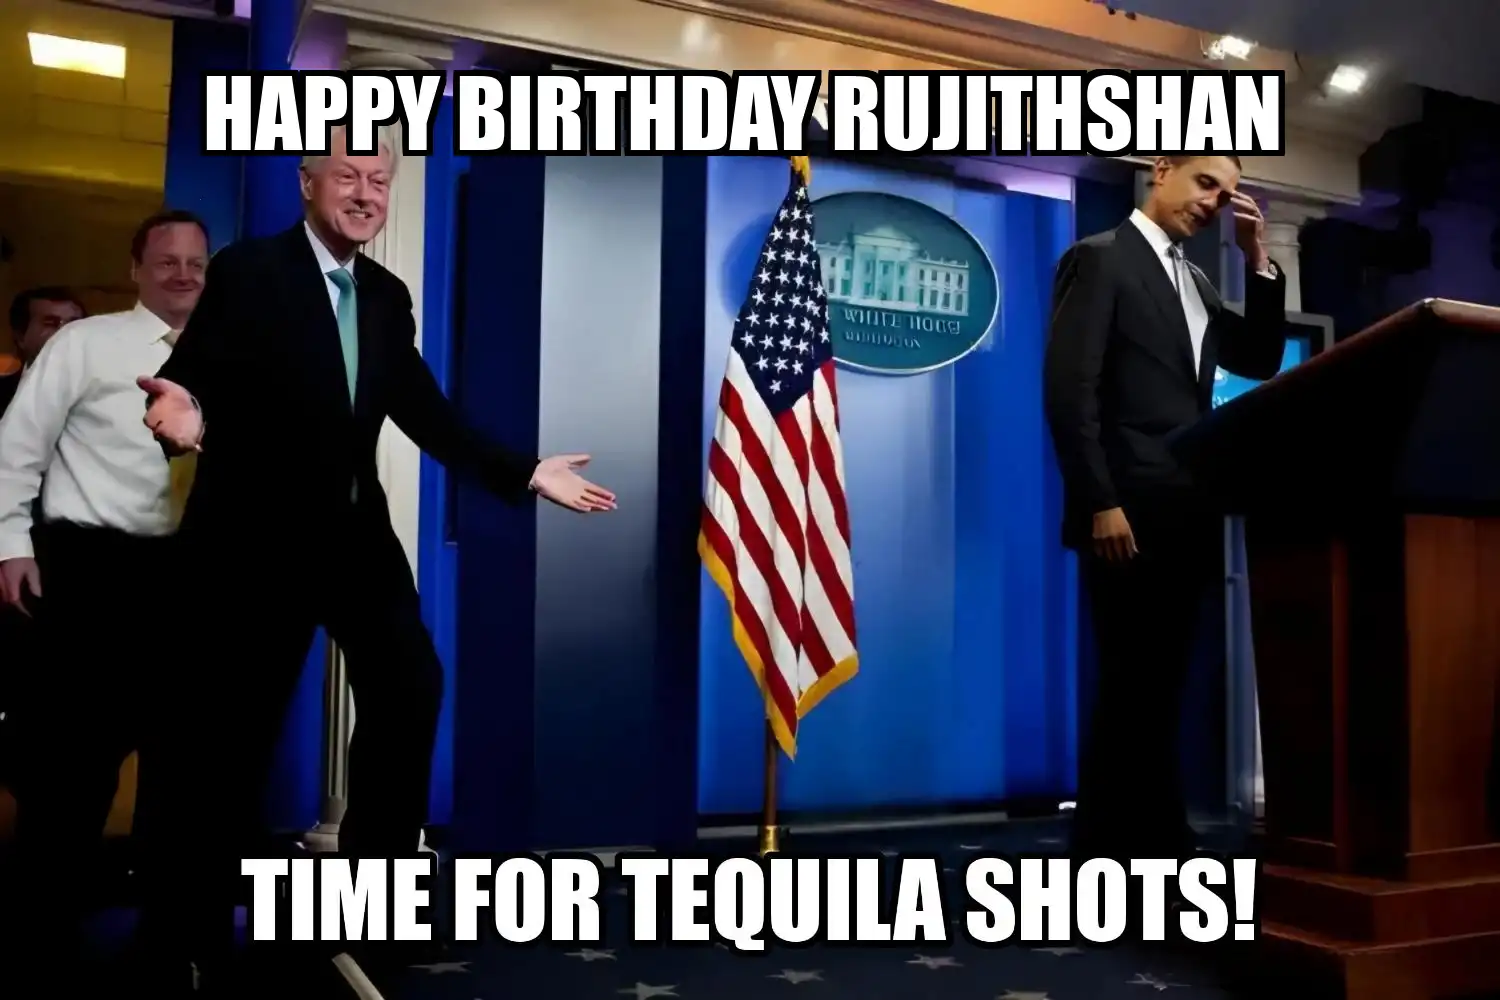 Happy Birthday Rujithshan Time For Tequila Shots Memes